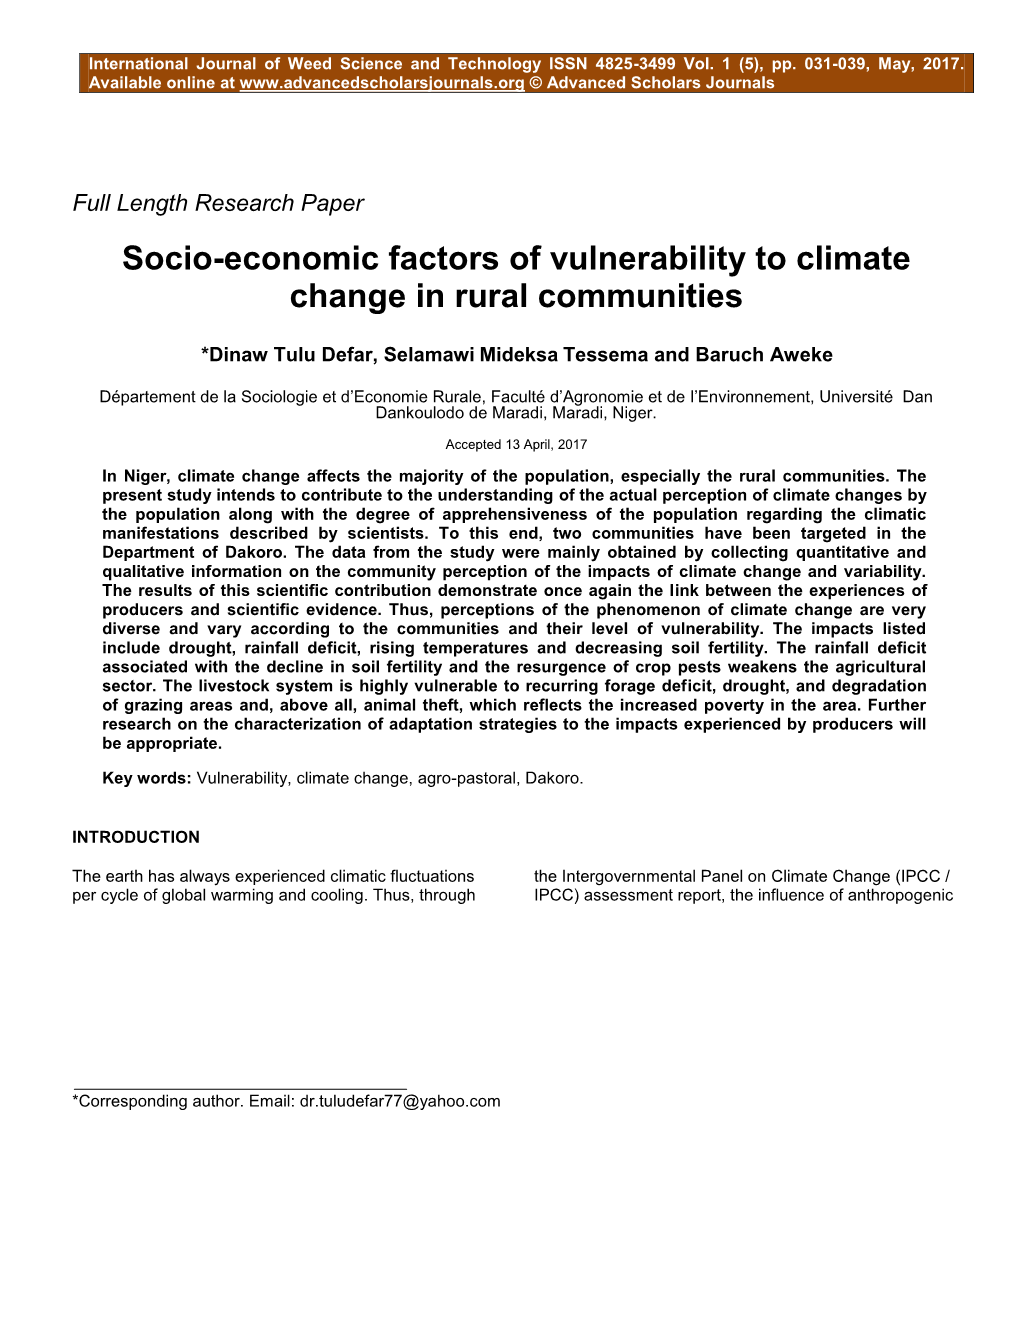 Socio-Economic Factors of Vulnerability to Climate Change in Rural Communities